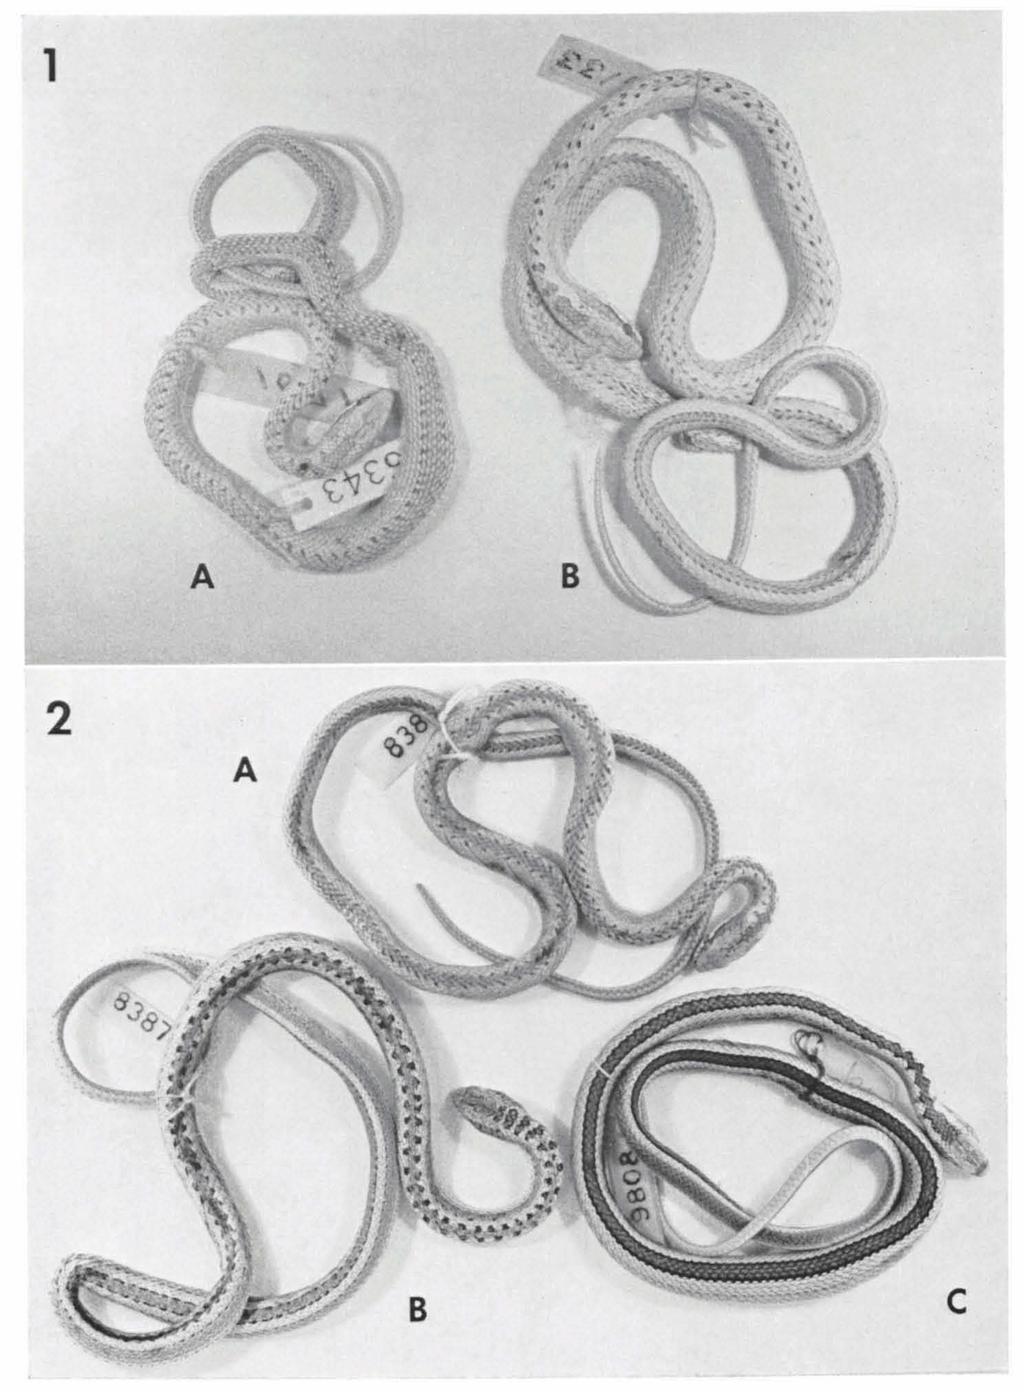 ZOOLOGISCHE MEDEDELINGEN 48 (17) PL. 1 Fig. 1. Type specimens of Tachymenis surinamensis Dunn. A. Paratype, FMNH 65343. B.